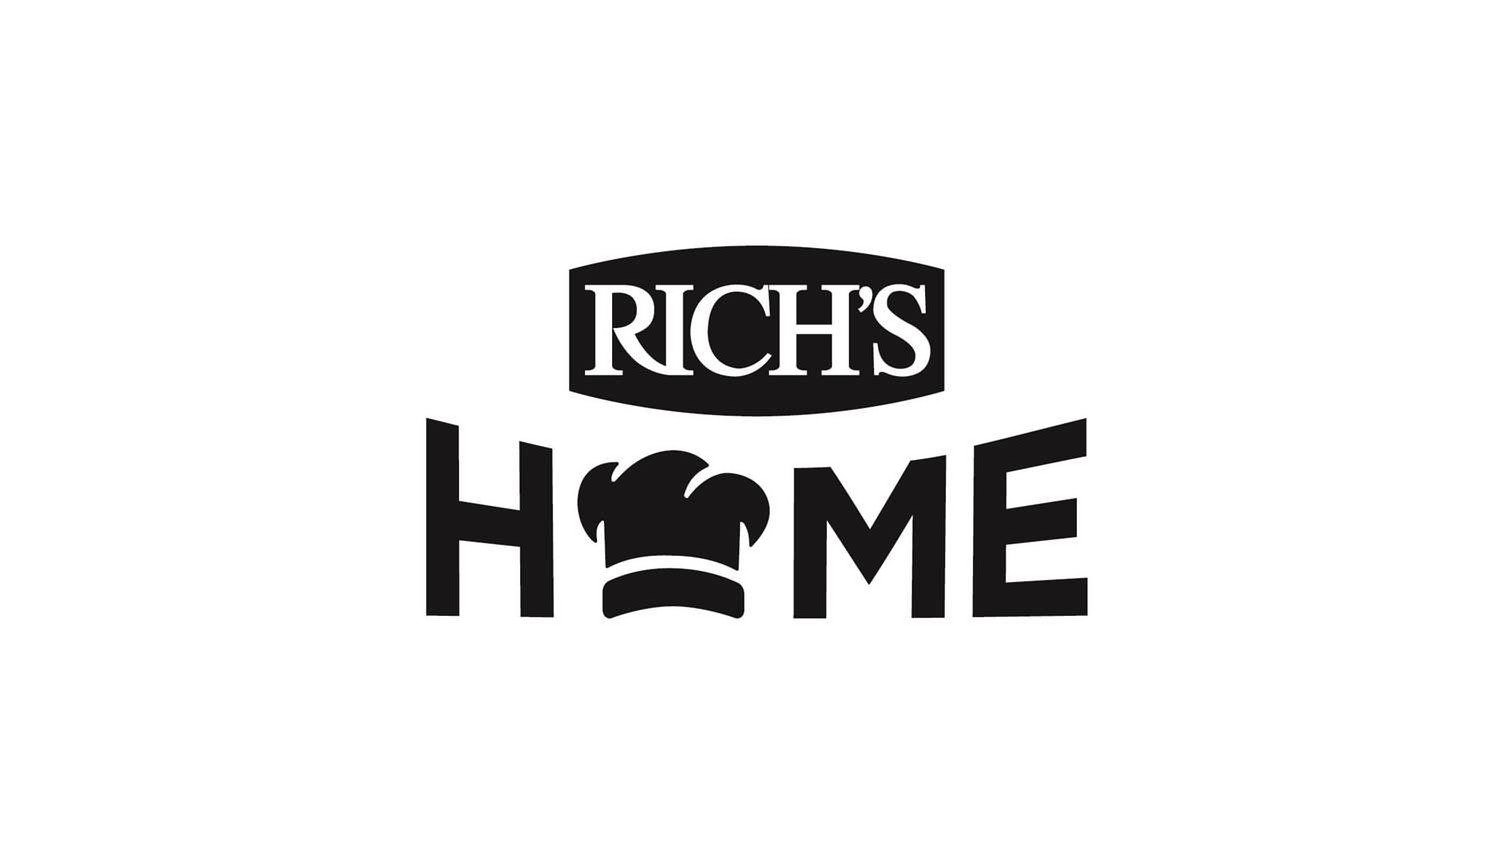  RICH'S HOME